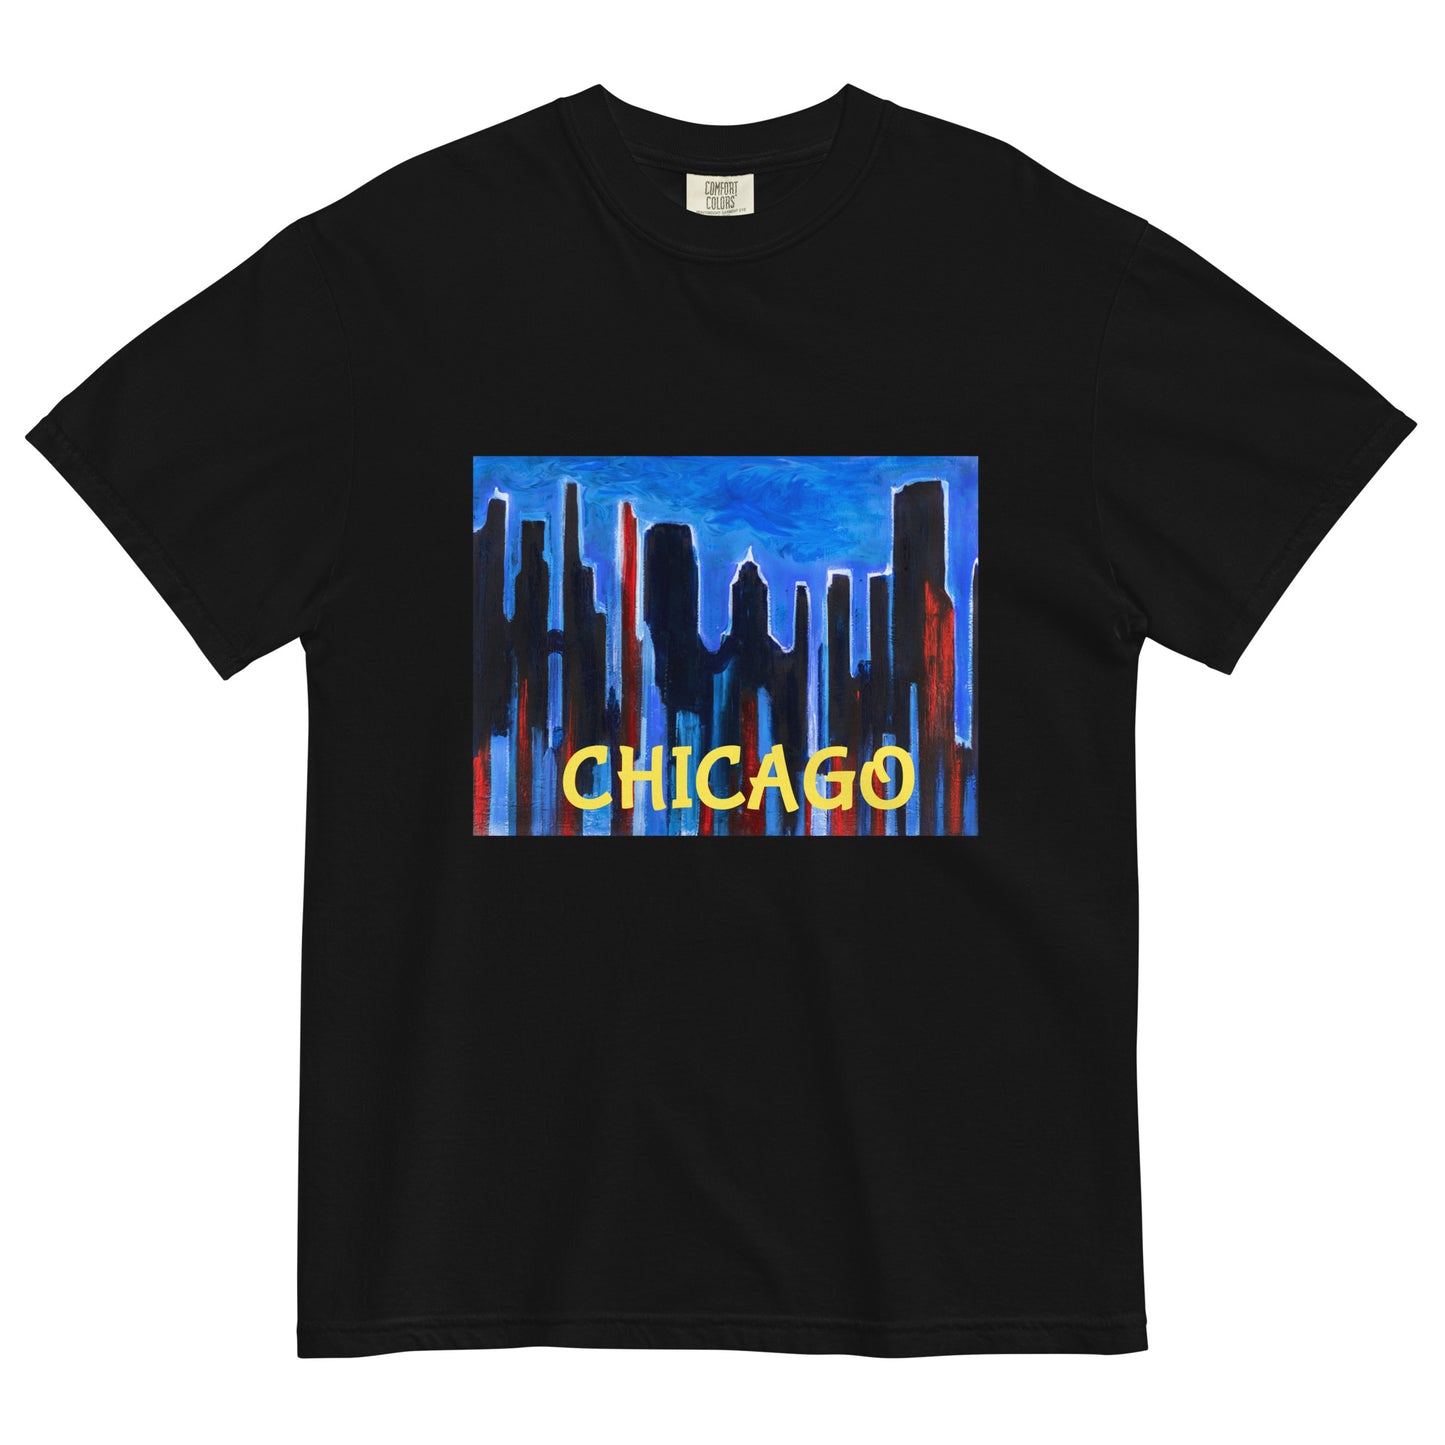 CHICAGO-  Unisex garment-dyed heavyweight t-shirt